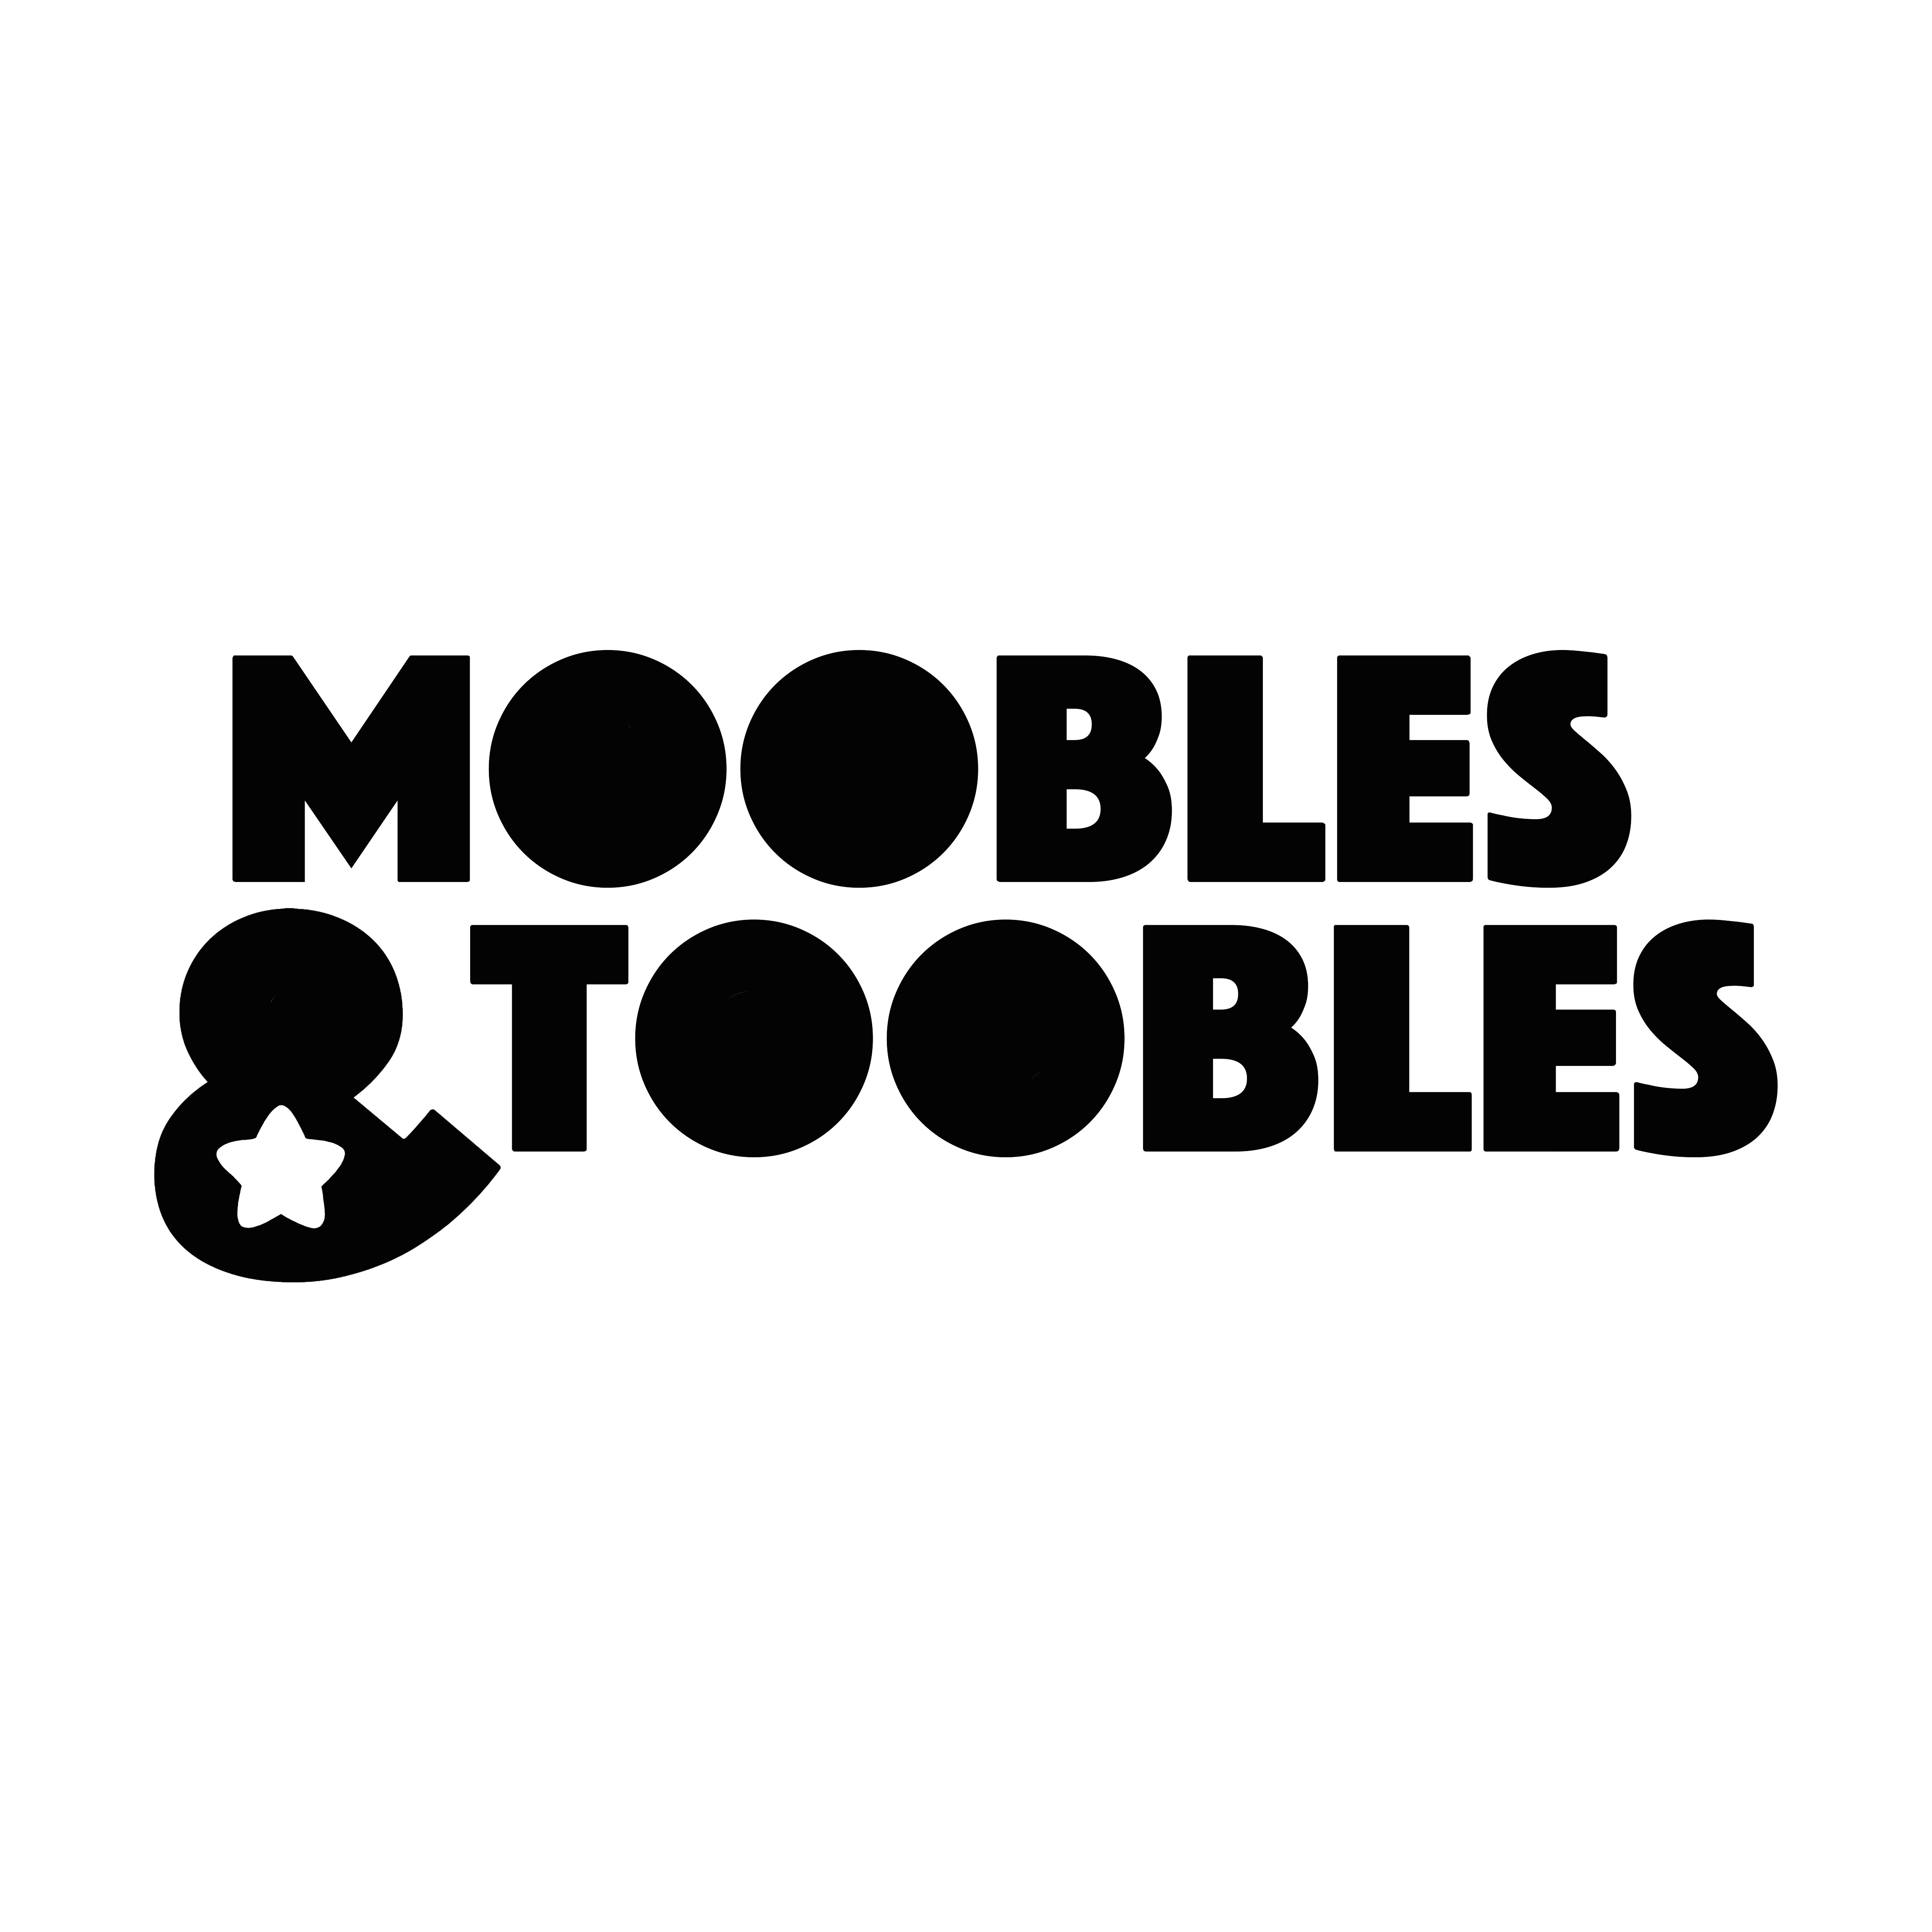 Moobles & Toobles